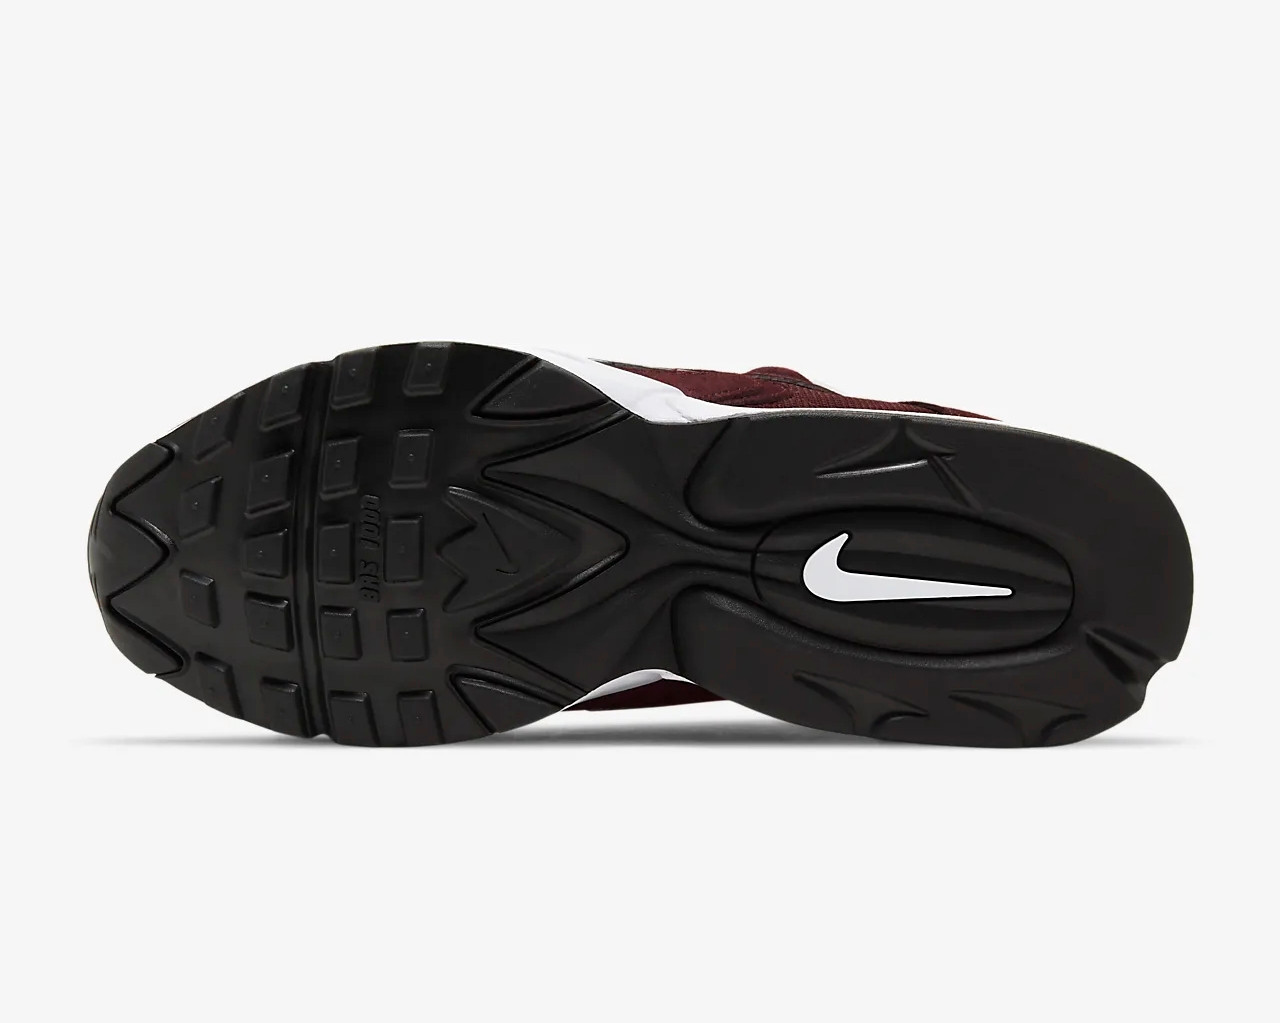 Erradicar Sociable fiabilidad Лосини nike pro s - 600 - AljadidShops - Nike Air Max Triax LE Mystic Dates  Black White Shoes CT0171